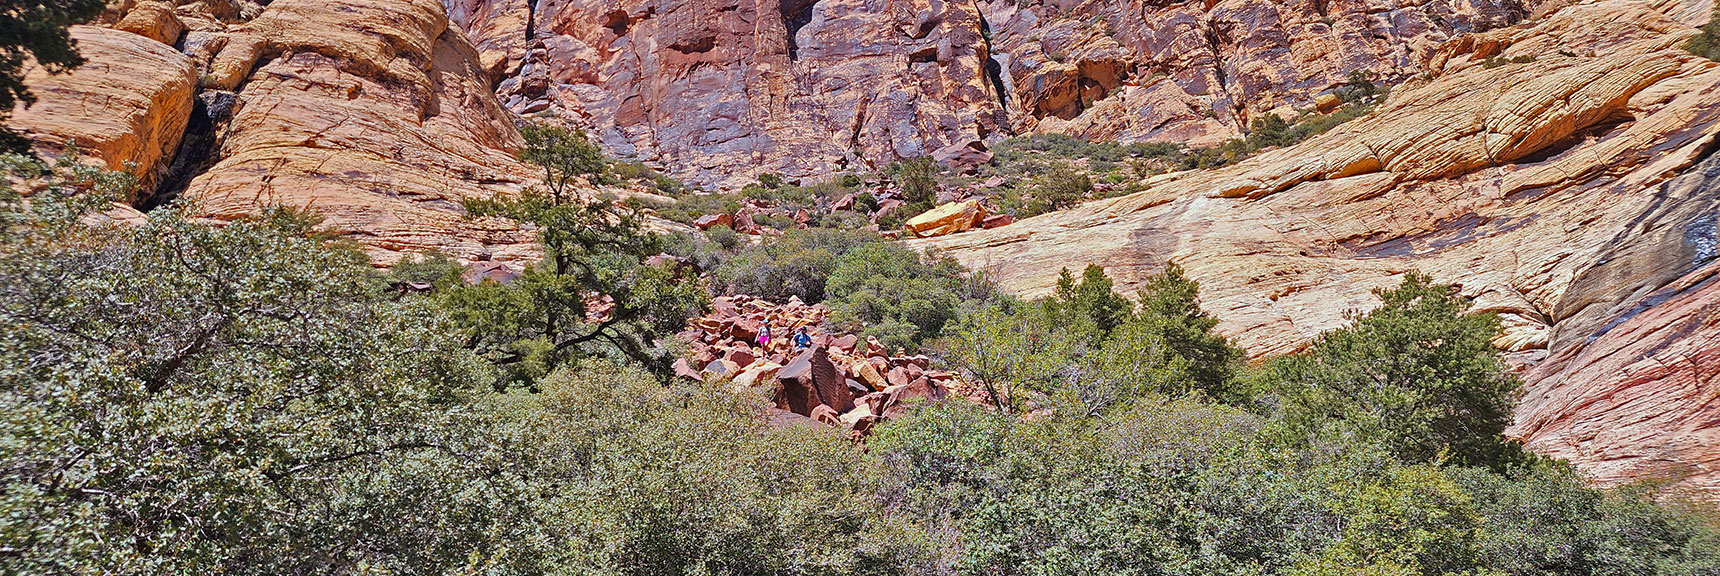 Larger View of Boulder Field and Sandstone Slab/Ridge Above. | Juniper Canyon | Red Rock Canyon National Conservation Area, Nevada | David Smith | LasVegasAreaTrails.com